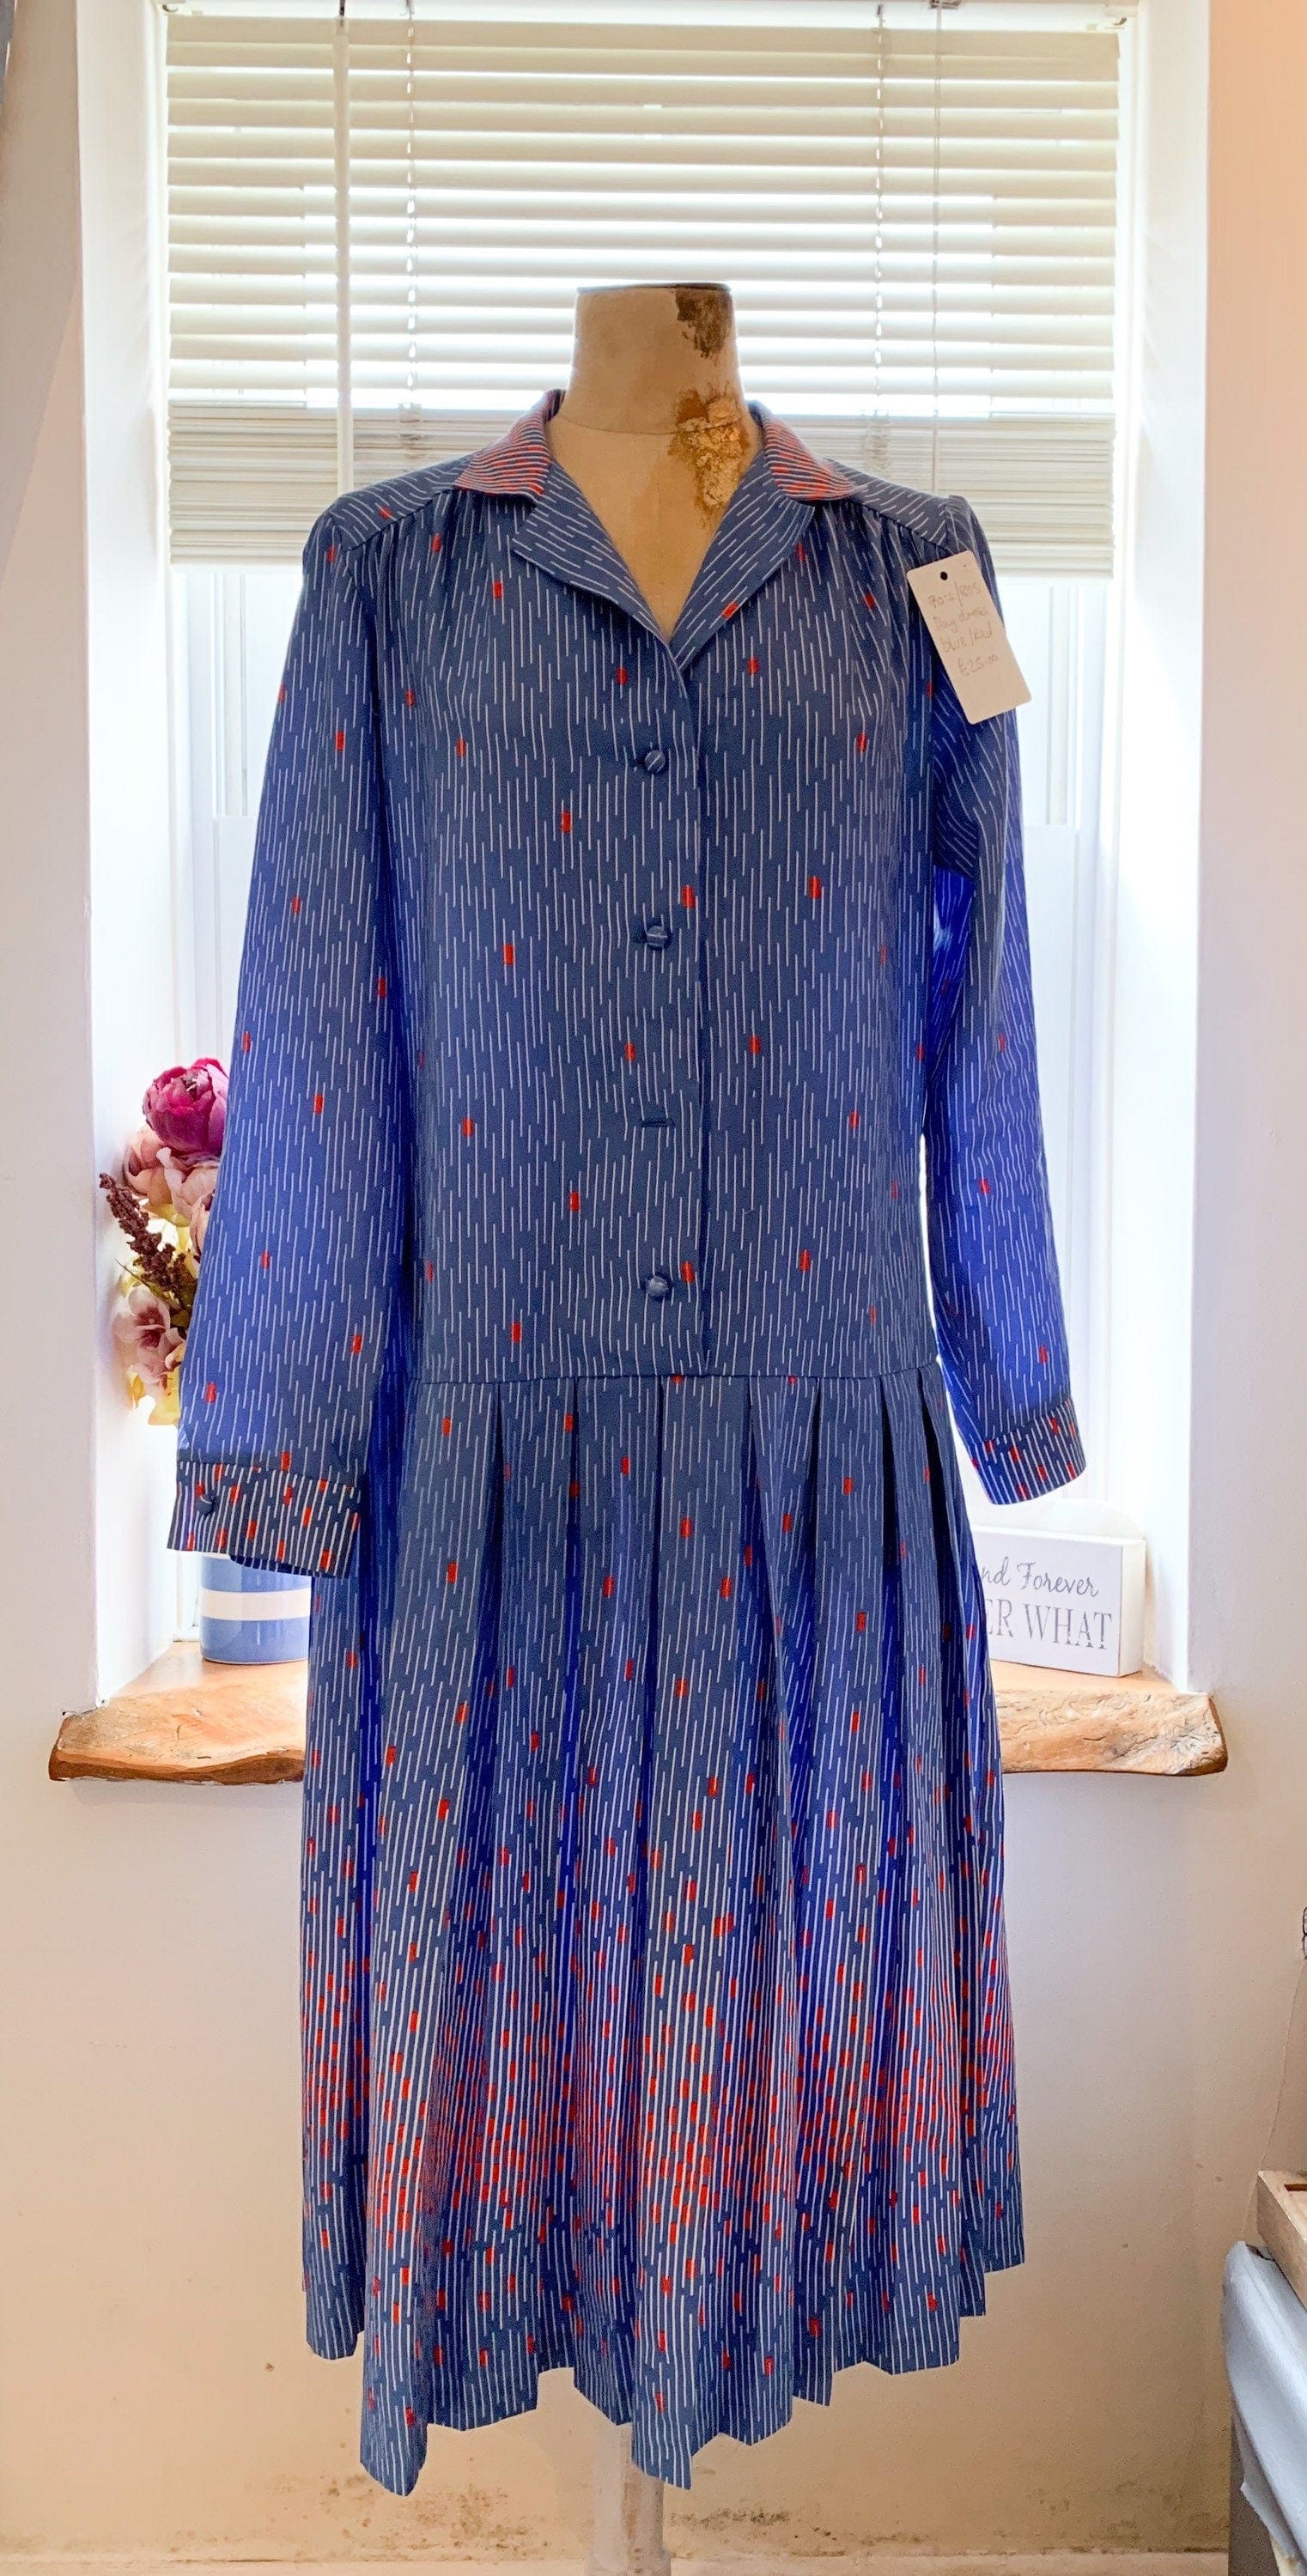 80s dress blue Vintage - Day Dress blue spot pattern pleated dress Rare Plus Size eu 42 size 16 blue and red voluptuous vintage